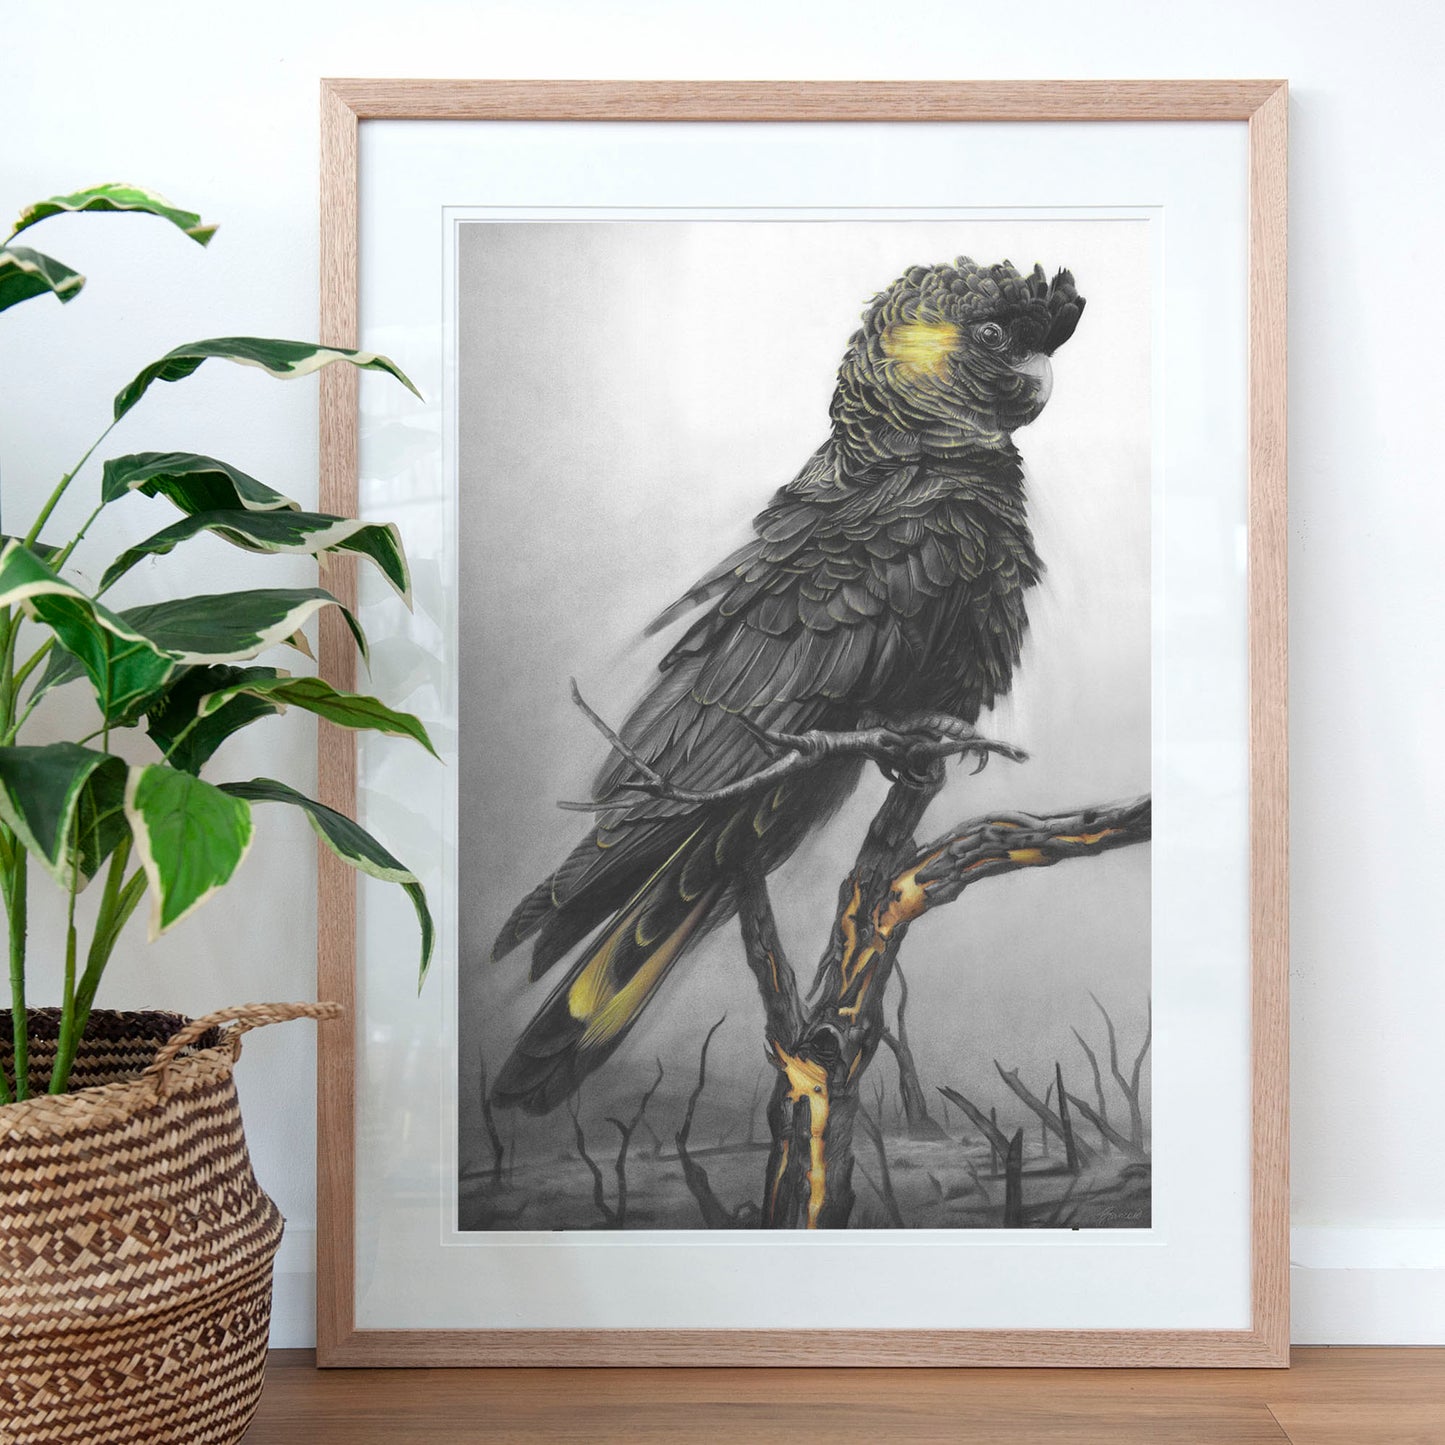 'Black Cockatoo' art print